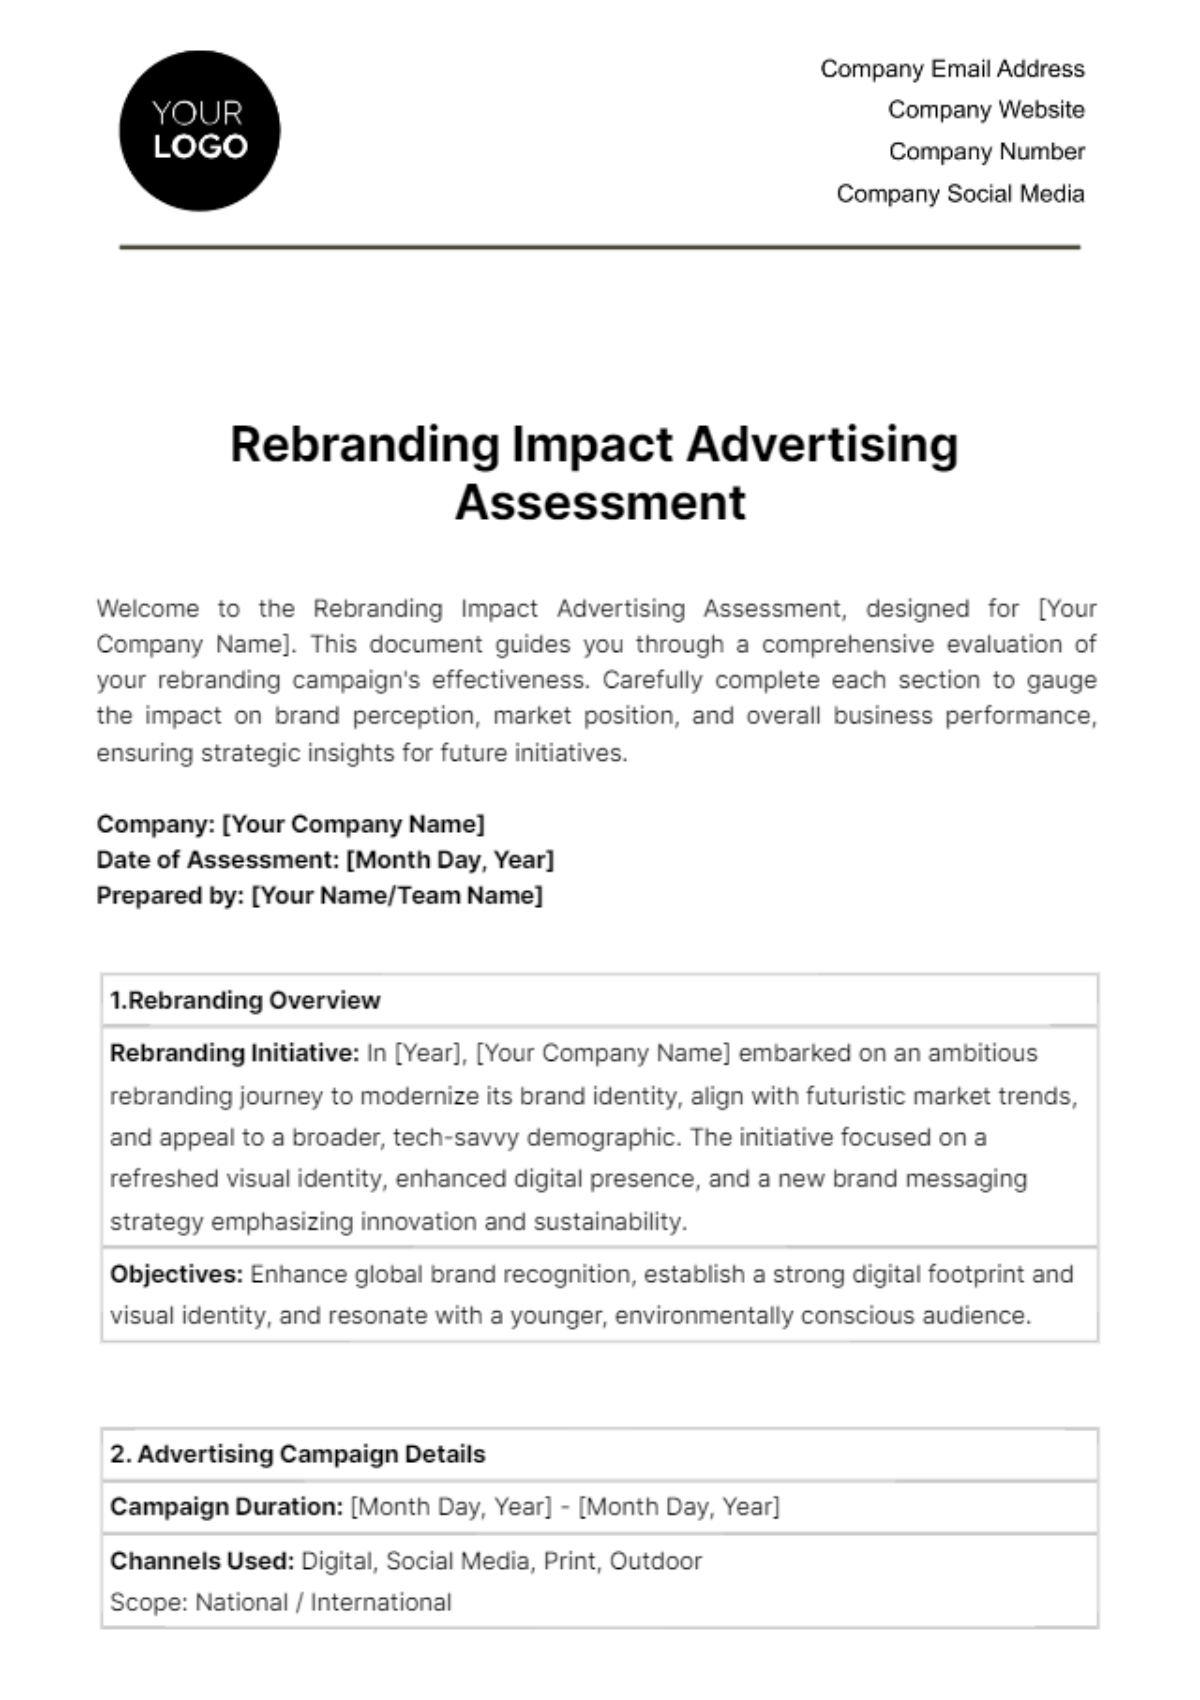 Free Rebranding Impact Advertising Assessment Template